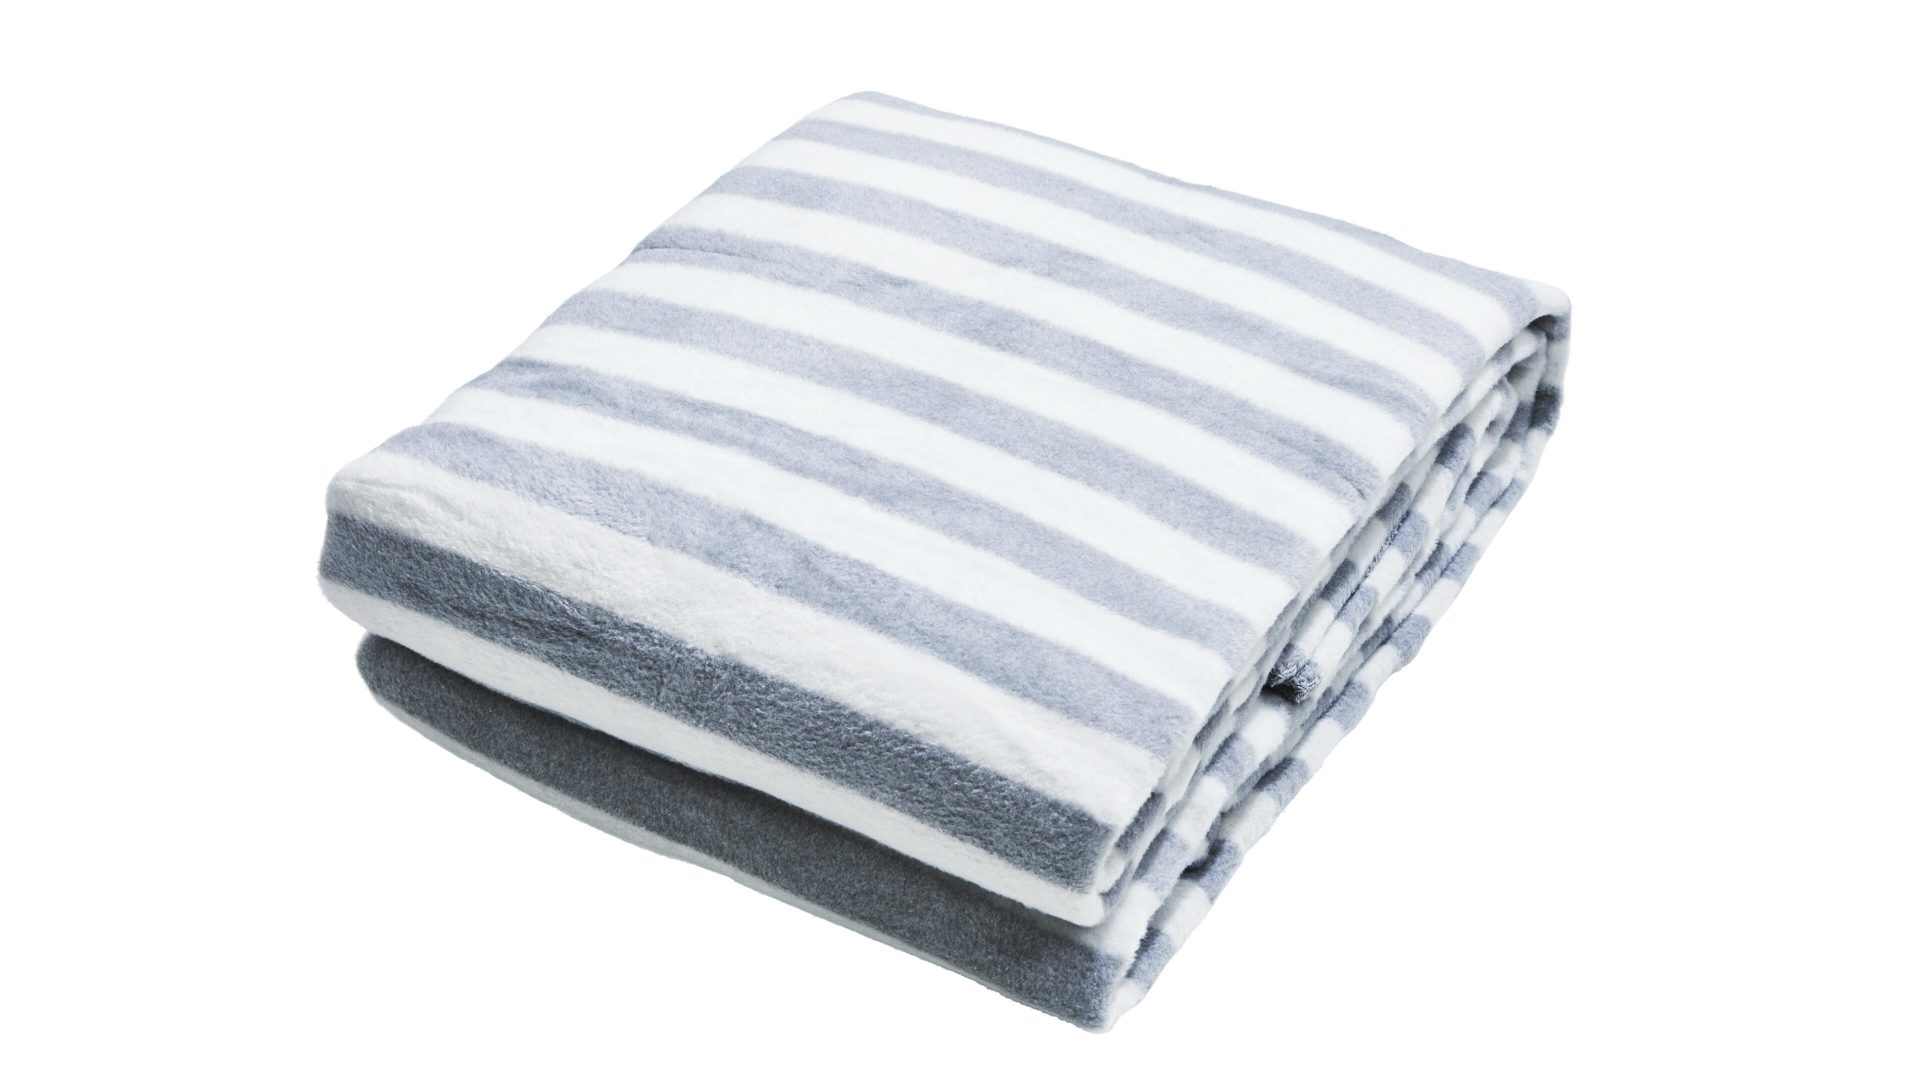 Wohndecke Done® by karabel home company aus Stoff in Grau done Wohndecke Blanket Stripes Silber & Weiß – ca. 150 x 200 cm